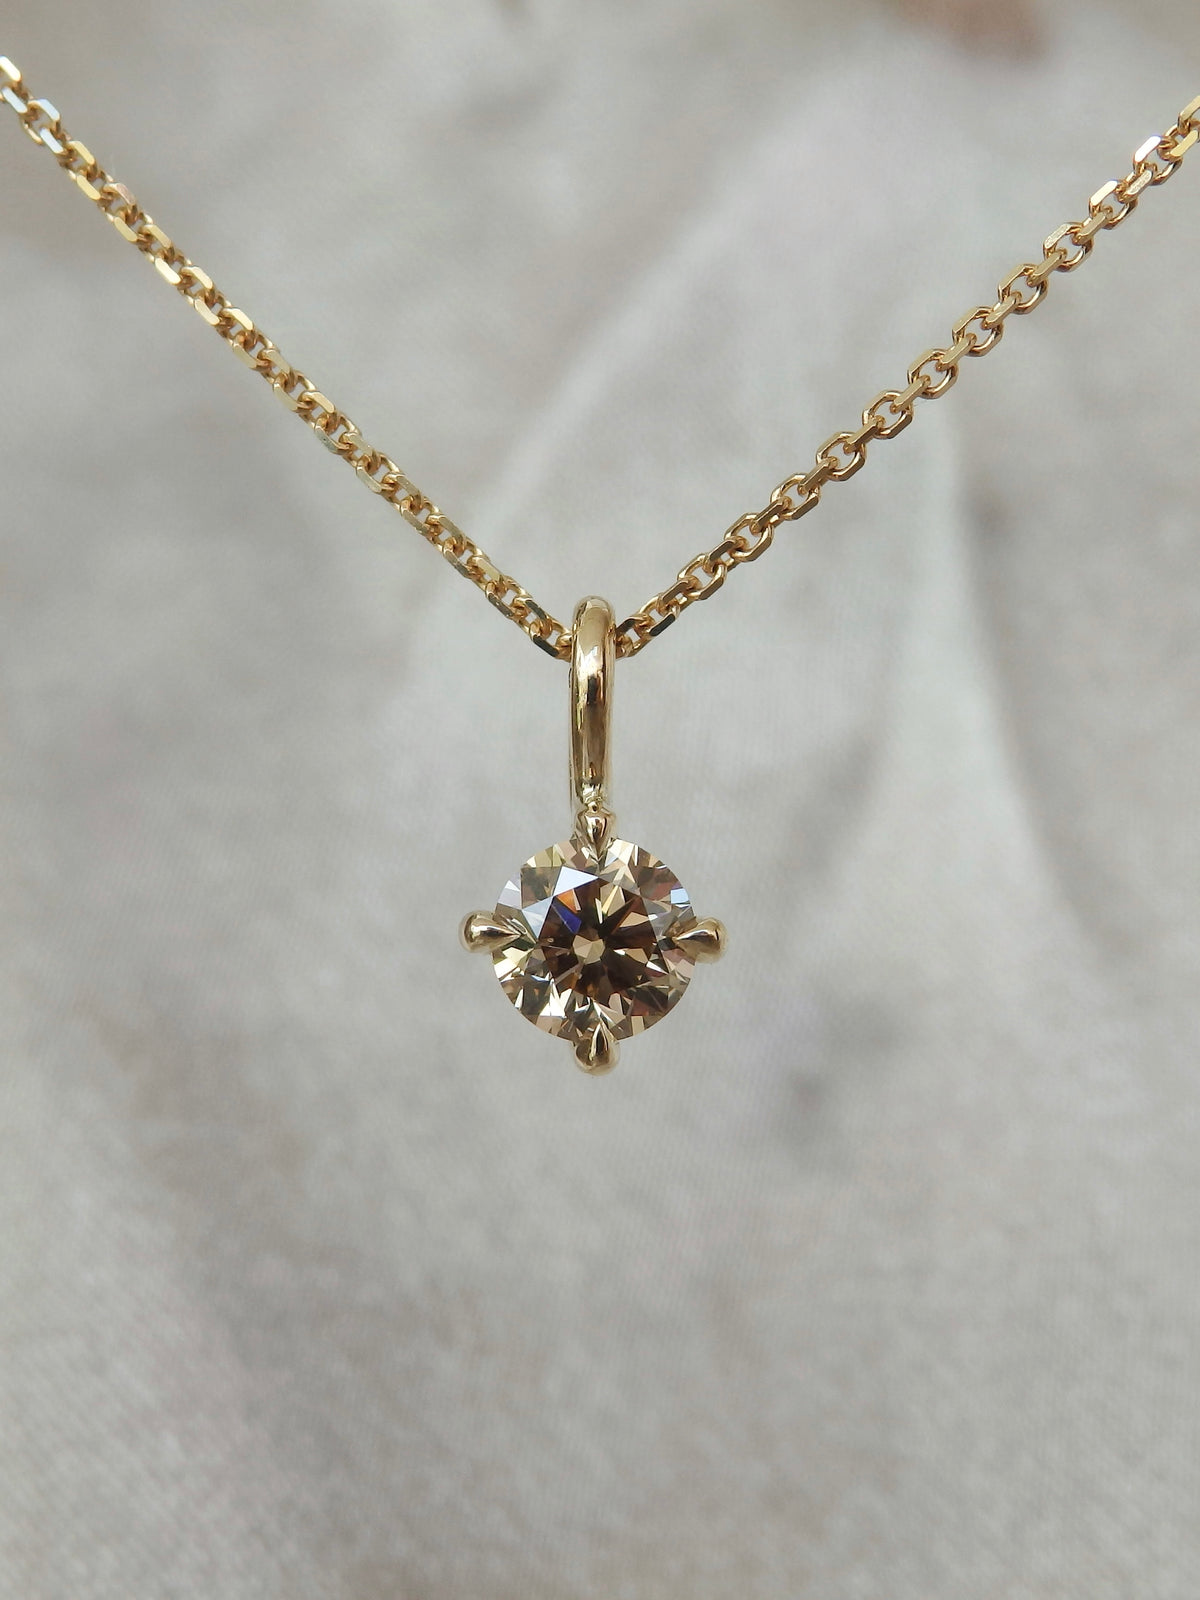 Australian Argyle Diamond Pendant, 18ct Yellow Gold